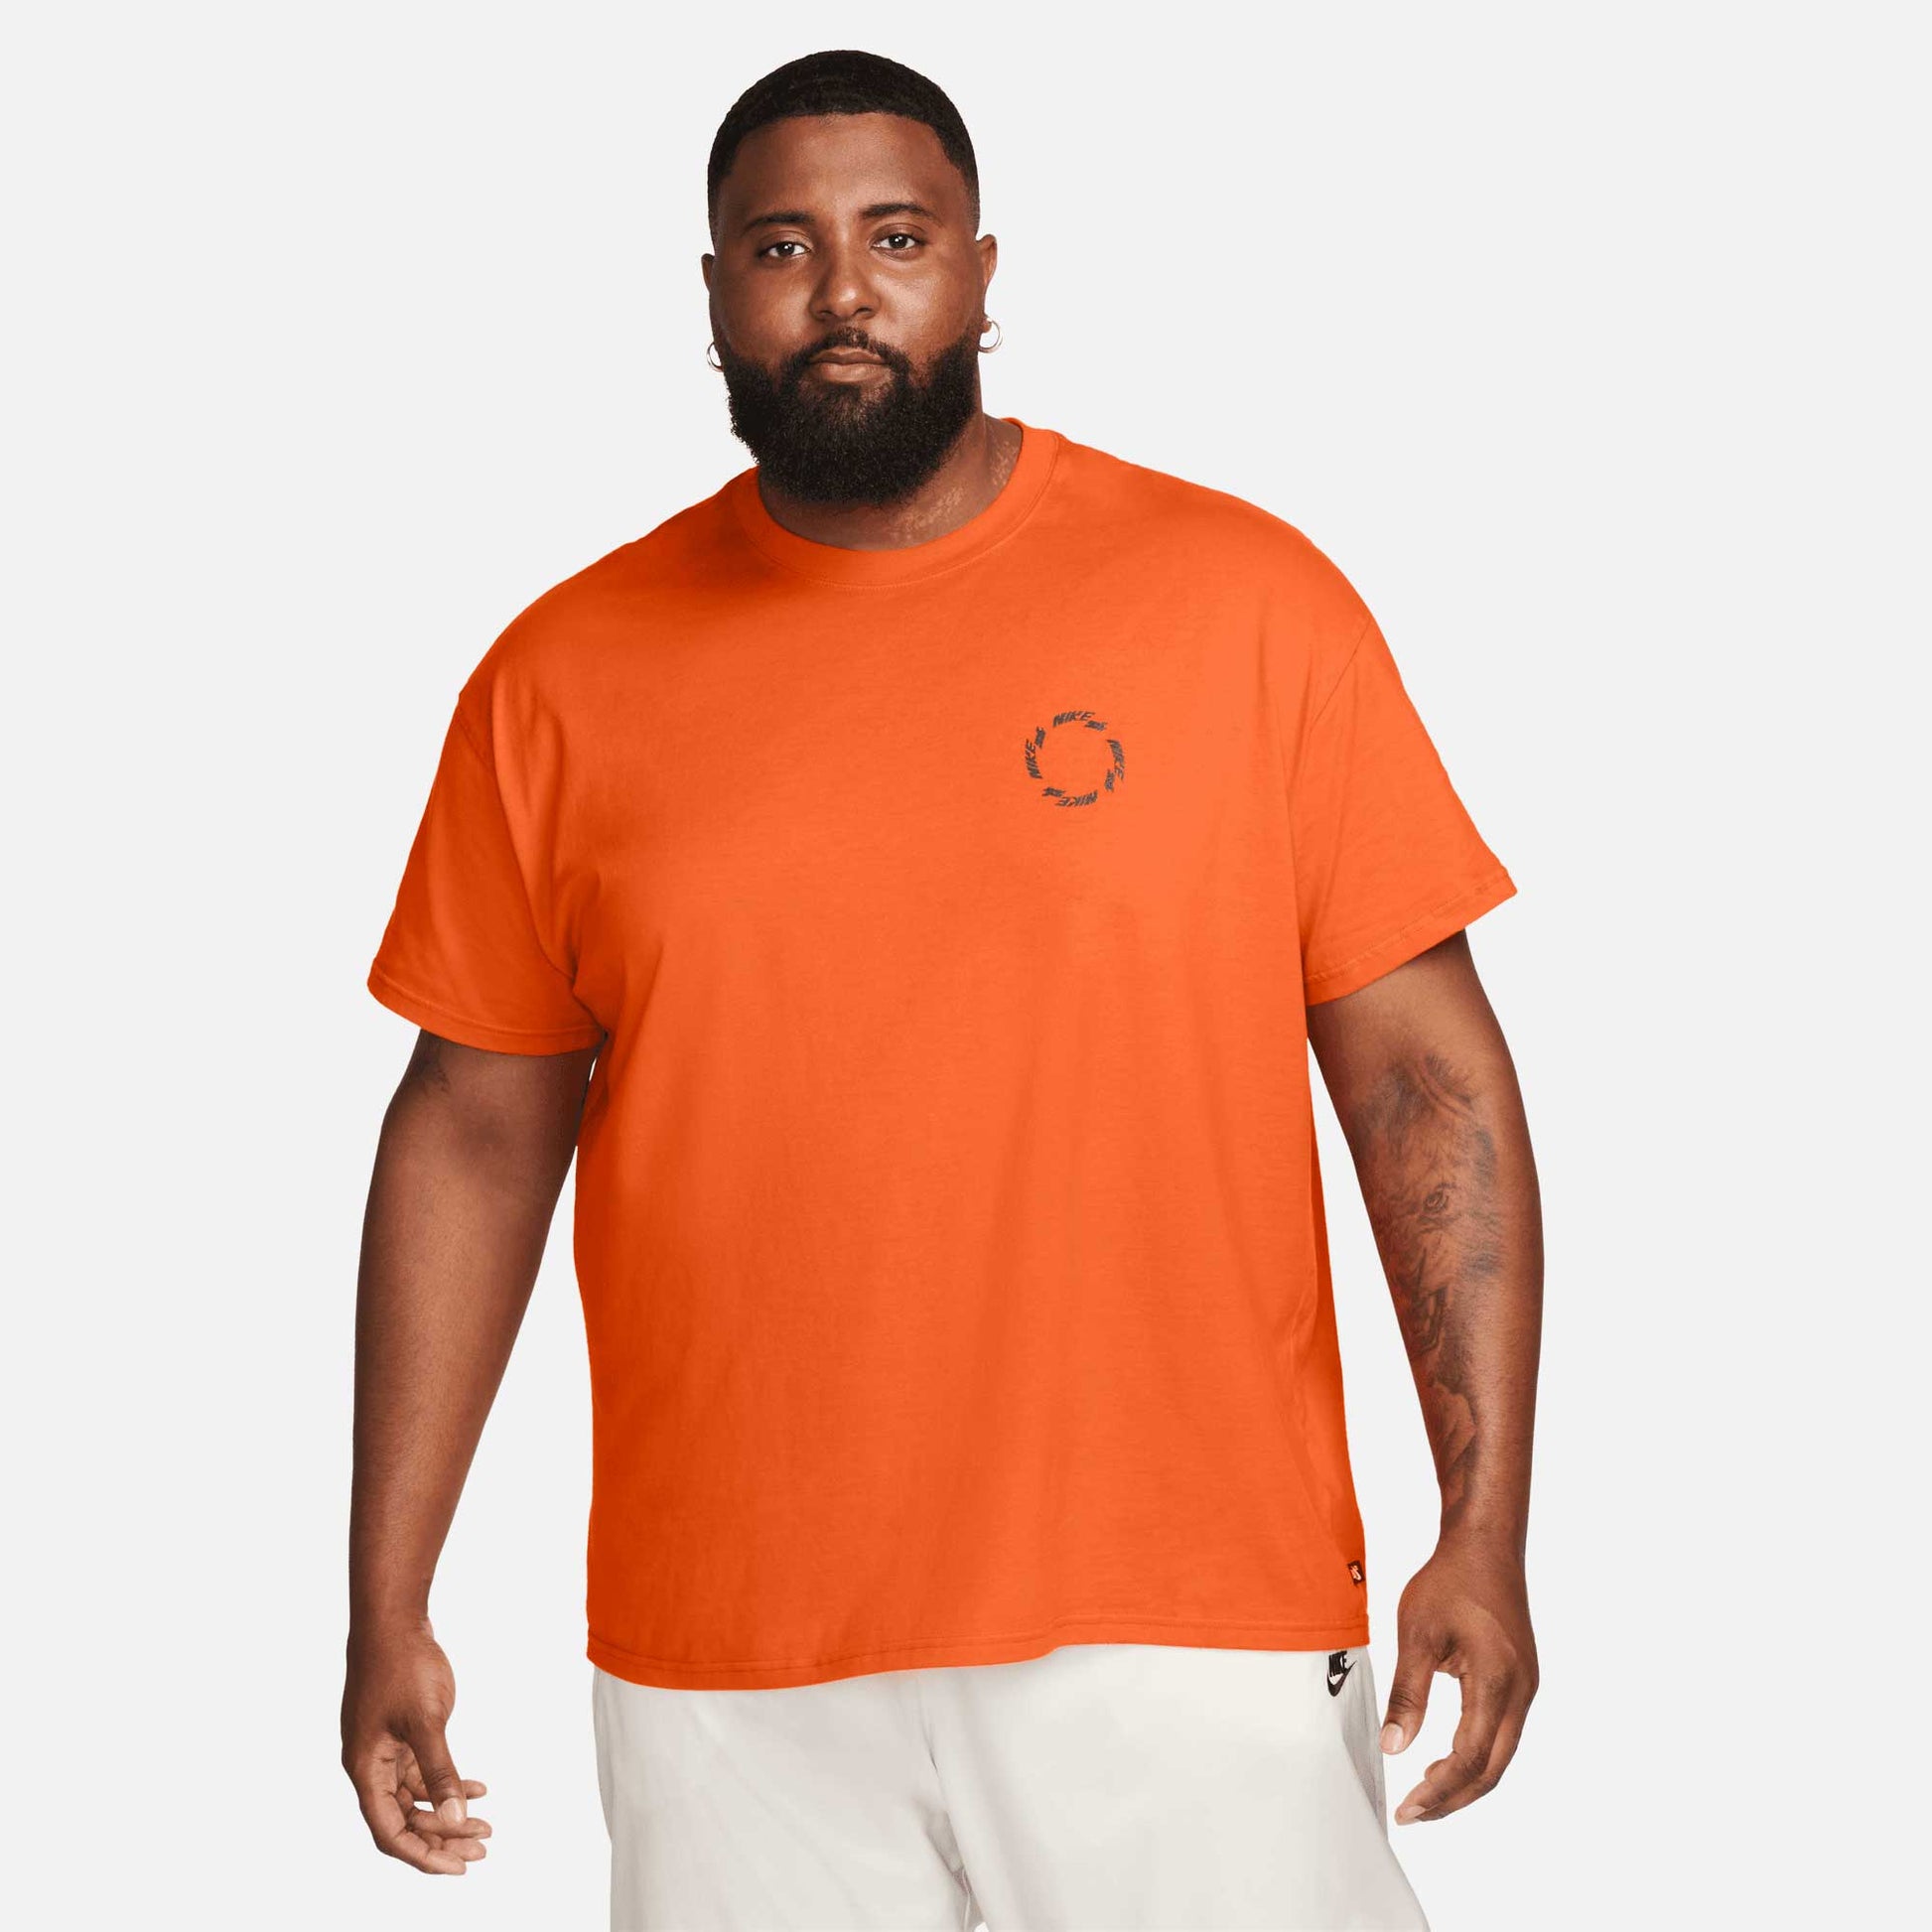 Nike SB Wheel T-Shirt, safety orange - Tiki Room Skateboards - 8